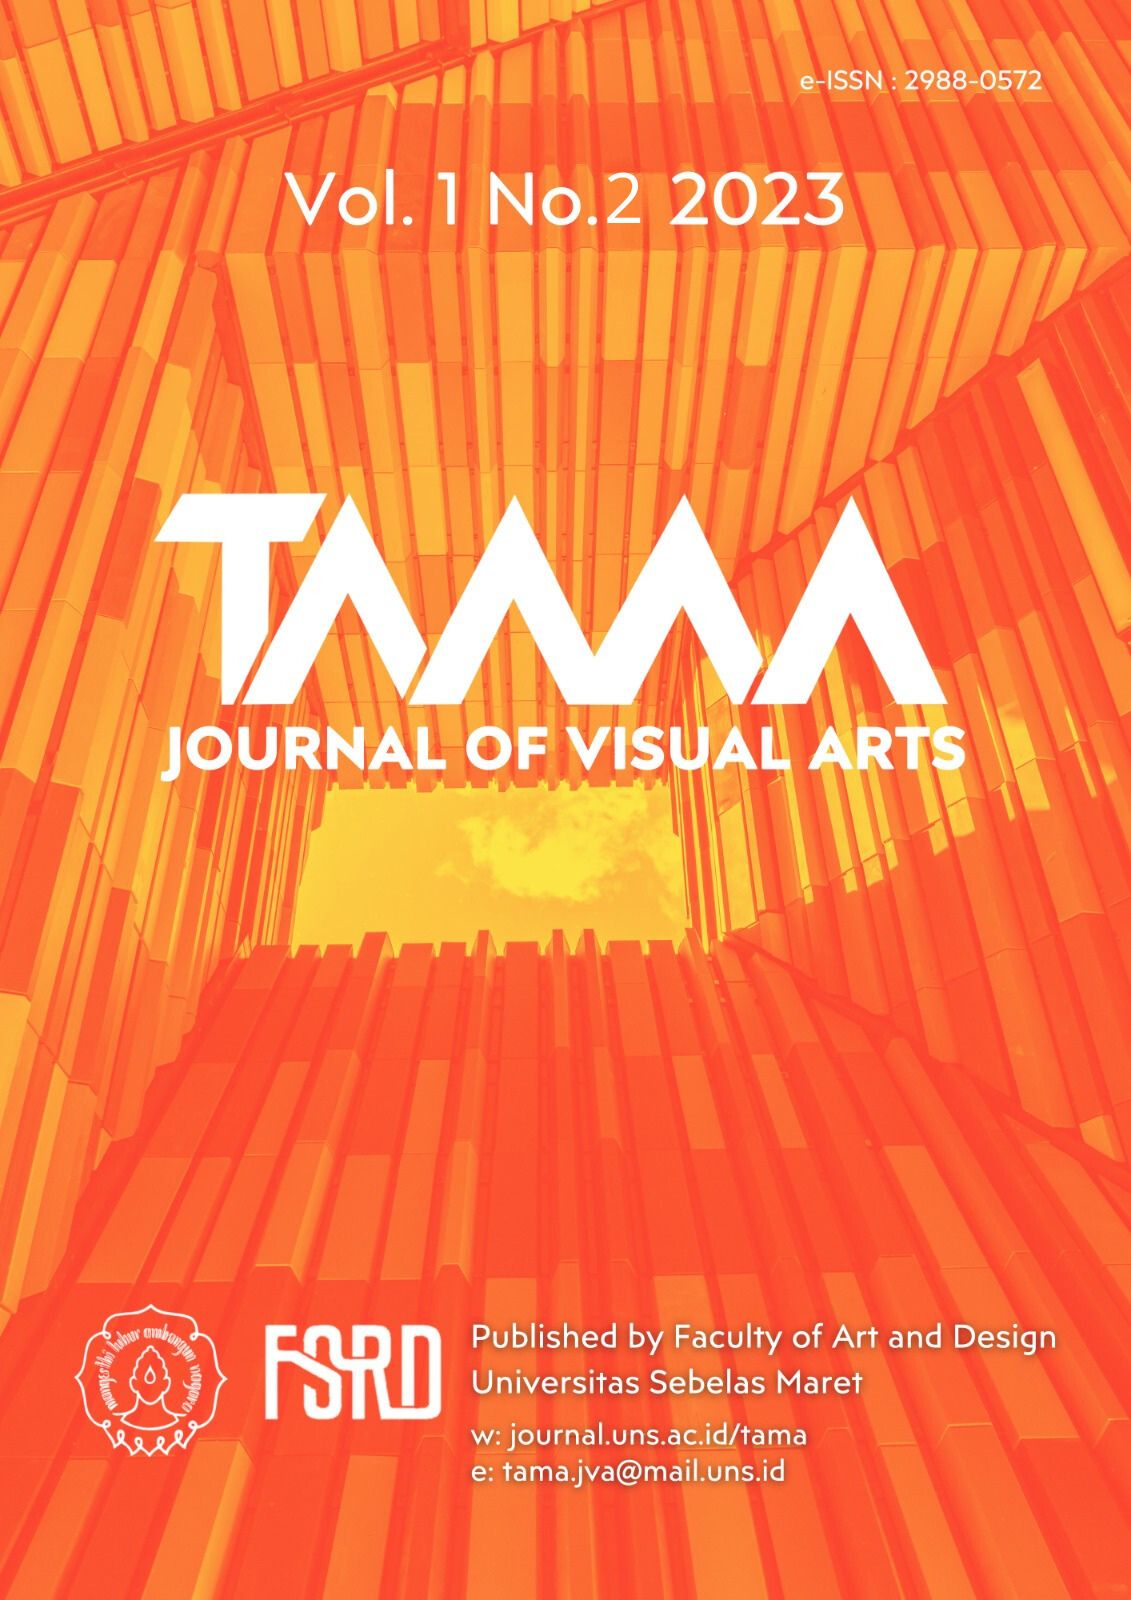 					View Vol. 1 No. 2 (2023): TAMA: JOURNAL OF VISUAL ART VOLUME 1 NO.2 DECEMBER
				